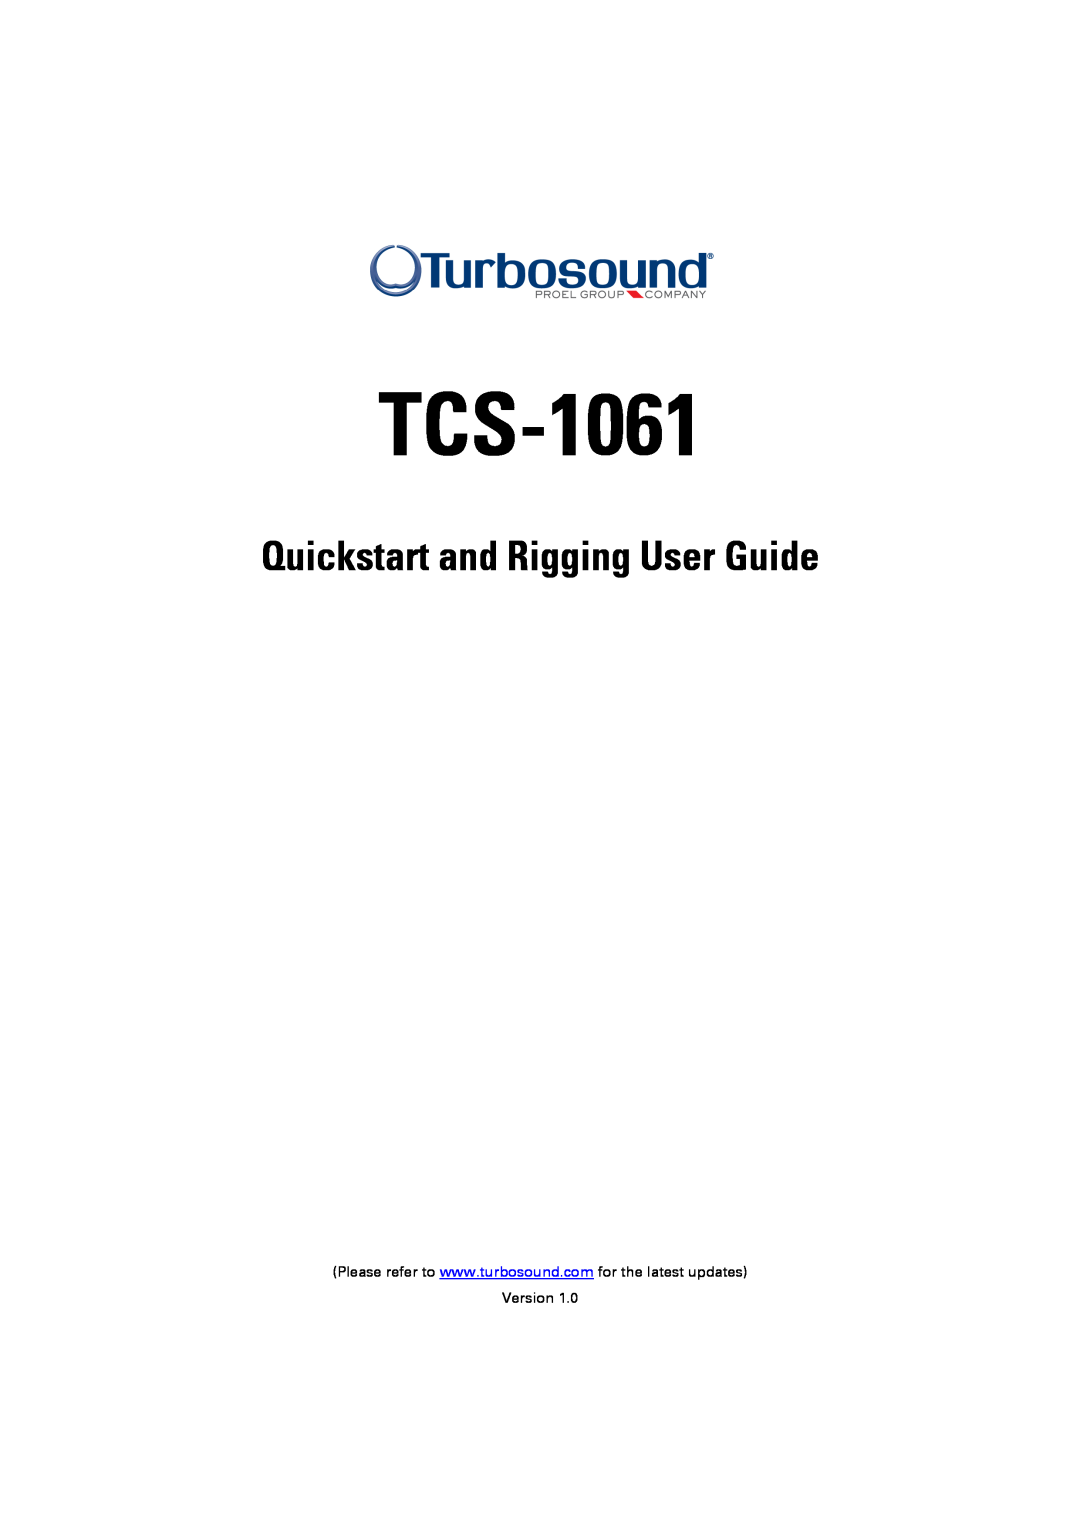 Turbosound TCS-1061 quick start Quickstart and Rigging User Guide 